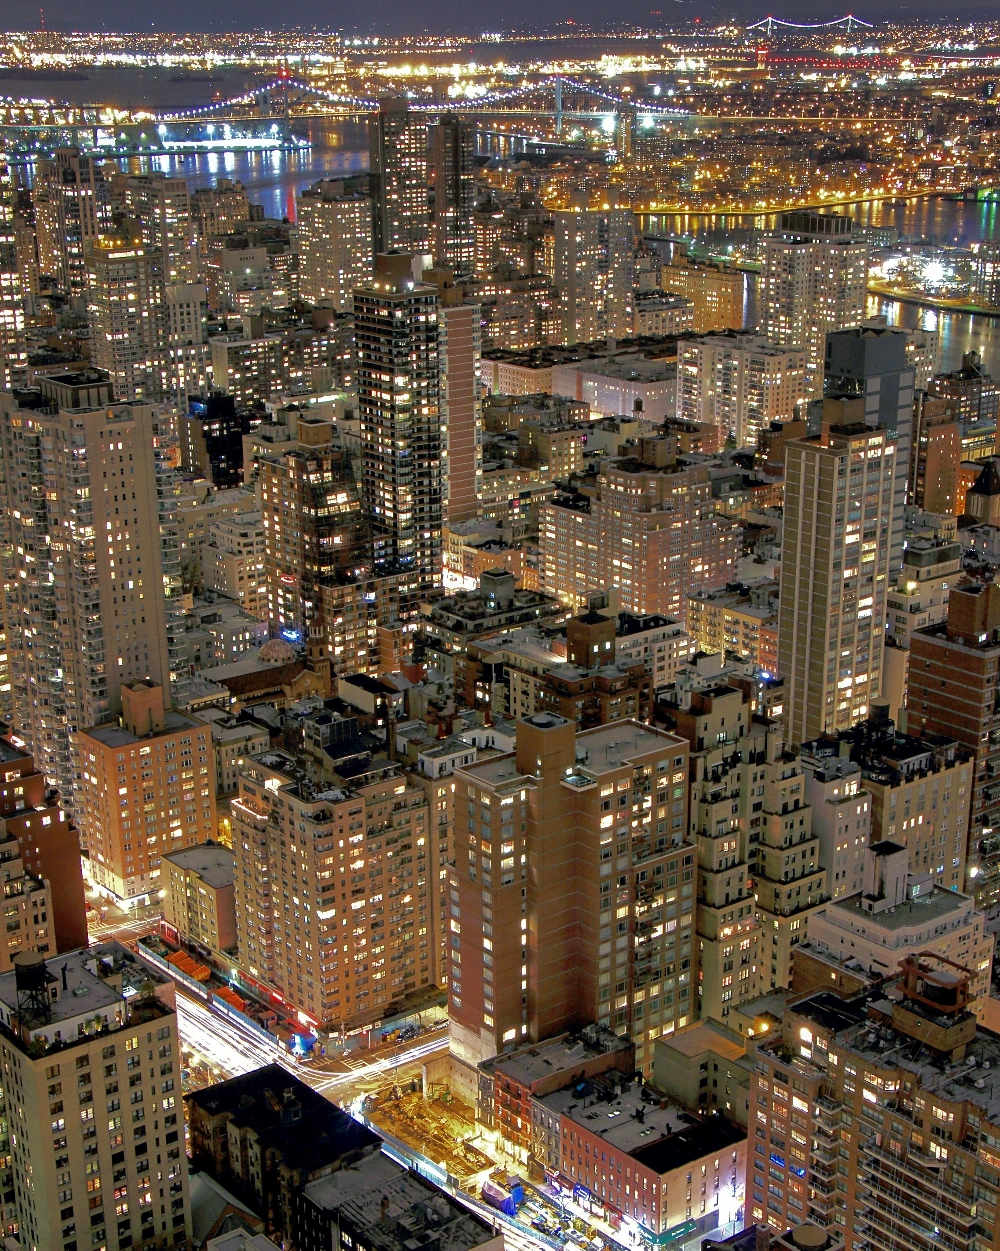 new York city's nightlife